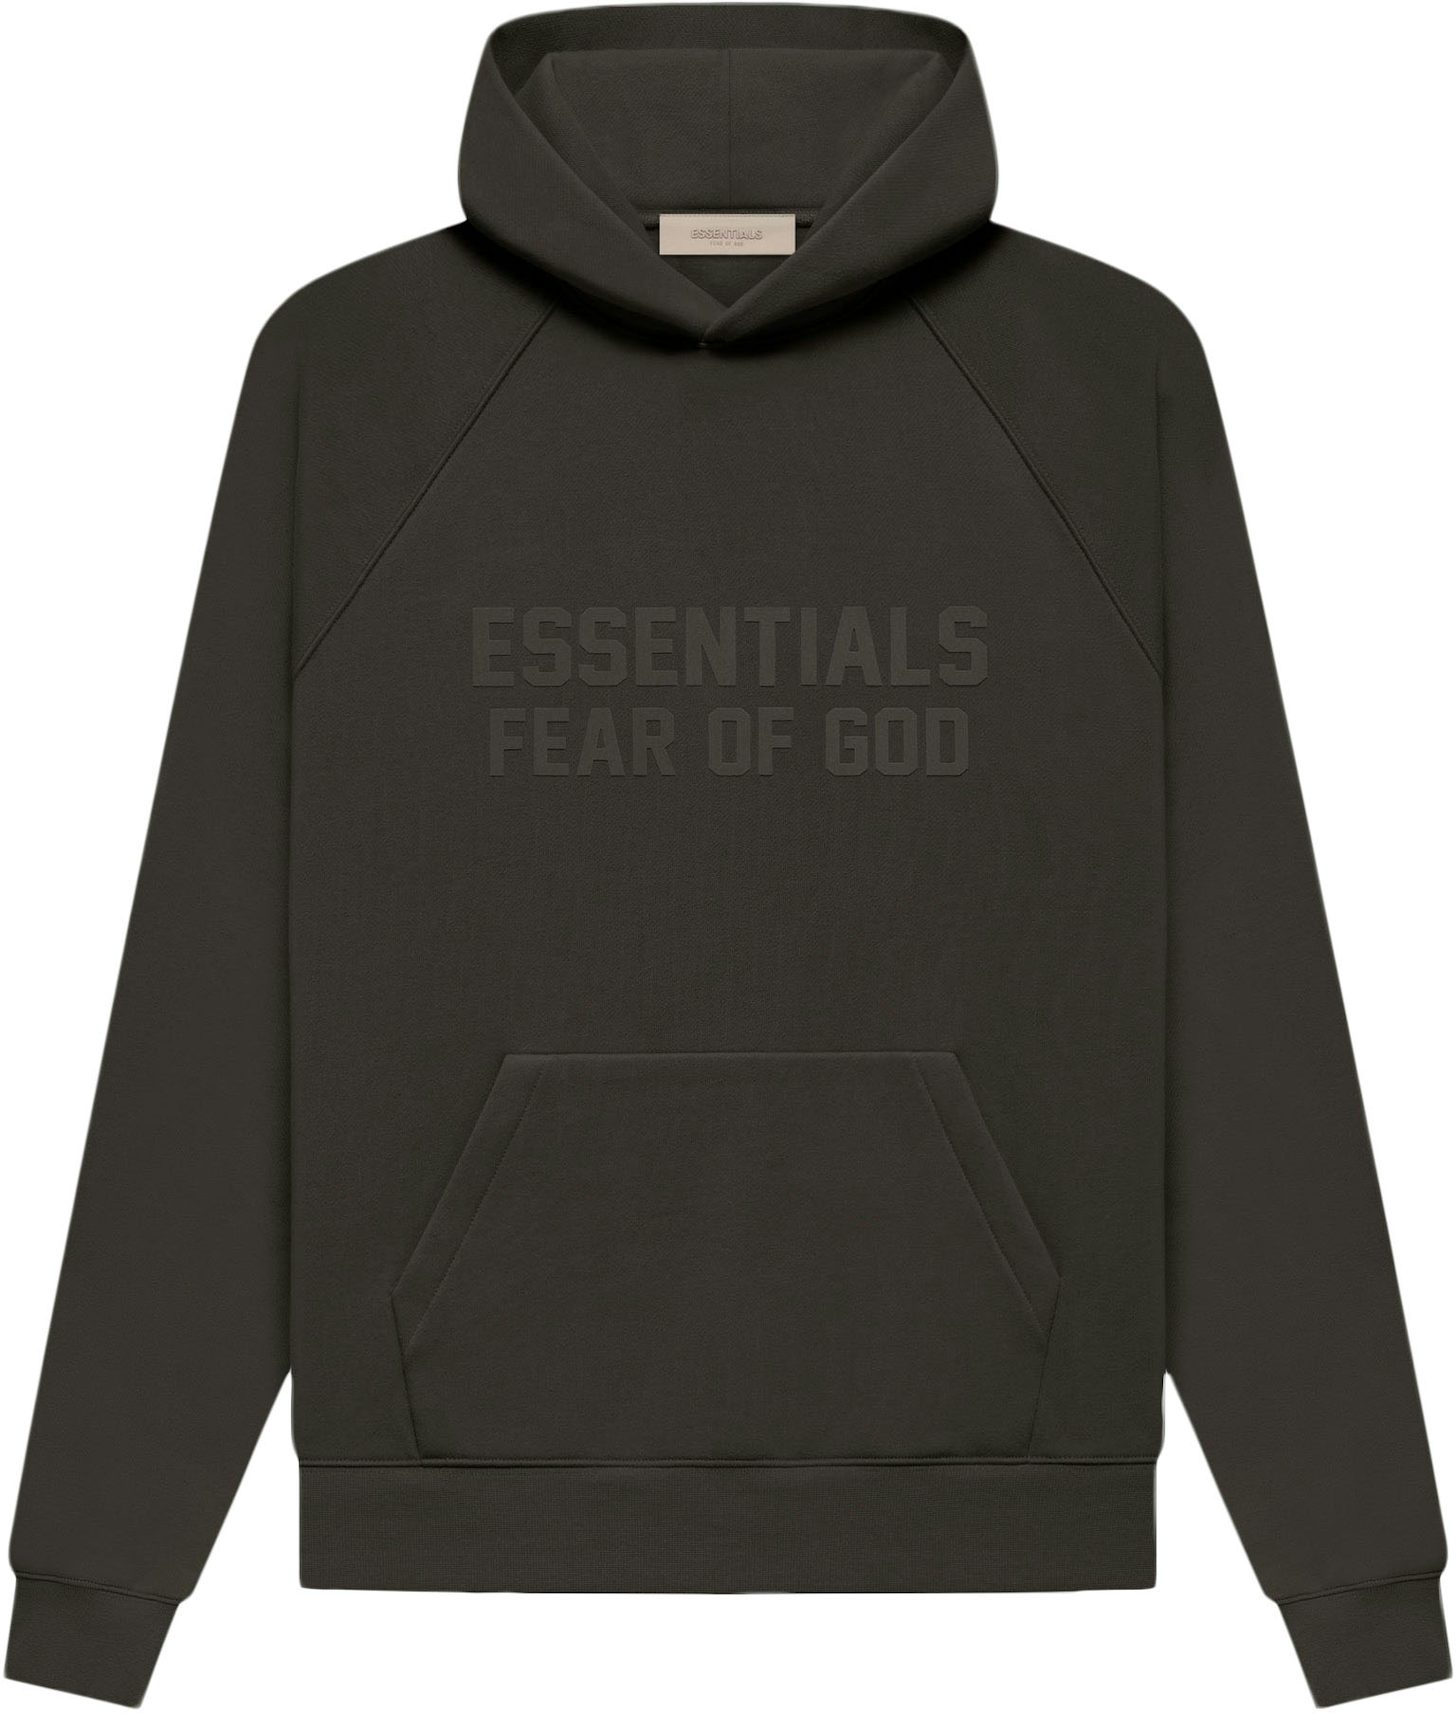 - Black FW22 Off God Essentials of Hoodie US Fear Men\'s -